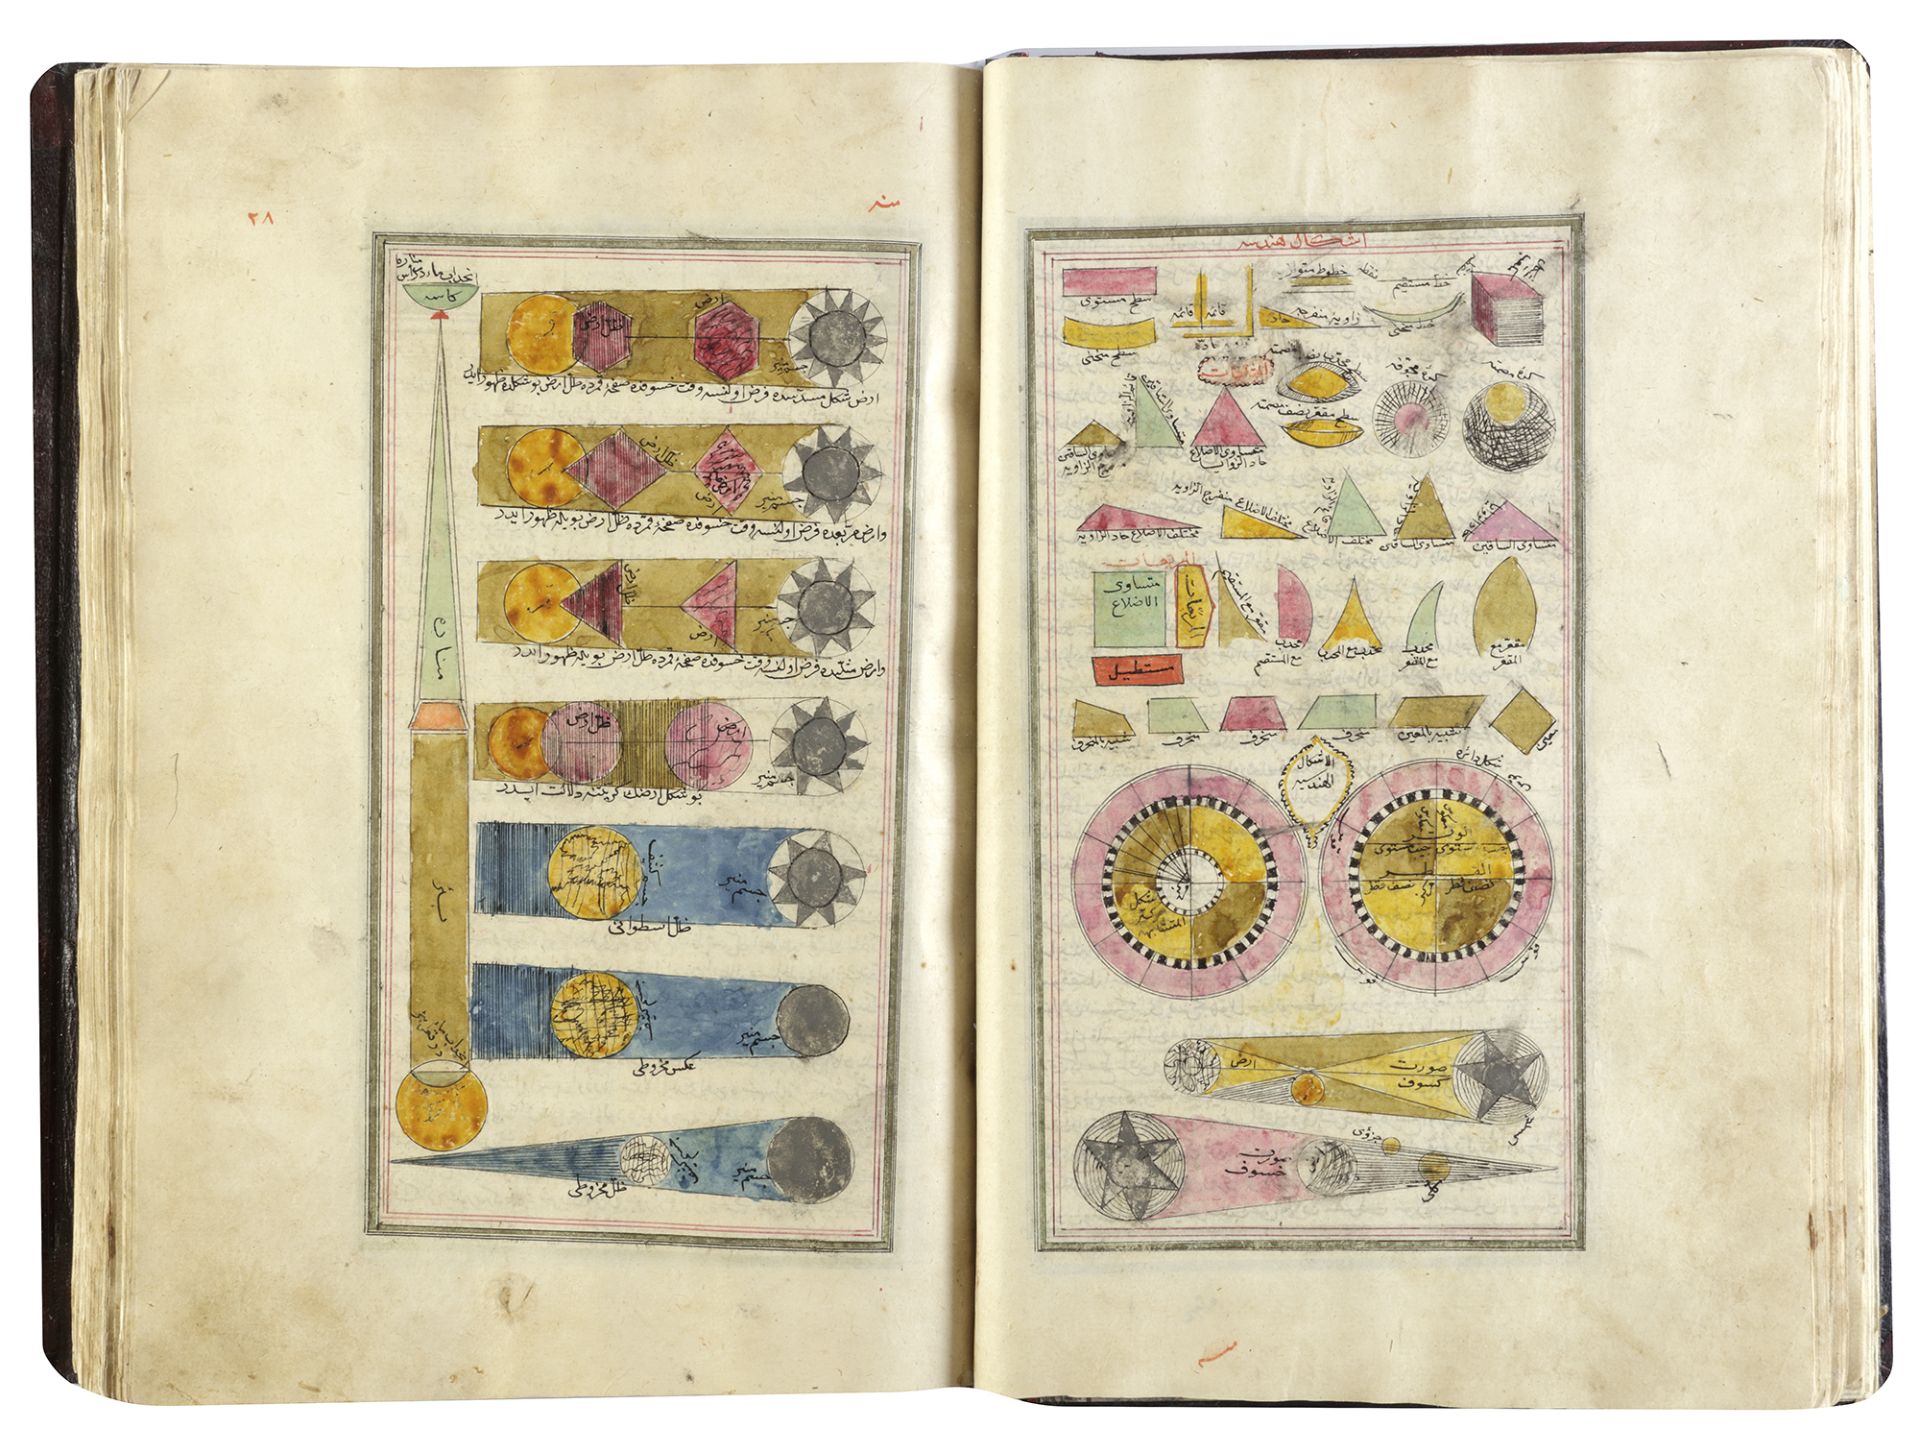 MARIFETNAME, IBRAHIM HAKKI, COPIED BY SAE'D ALLAH BIN ALI BIN AHMED, TURKEY, 1221 AH/1806 AD - Image 8 of 58